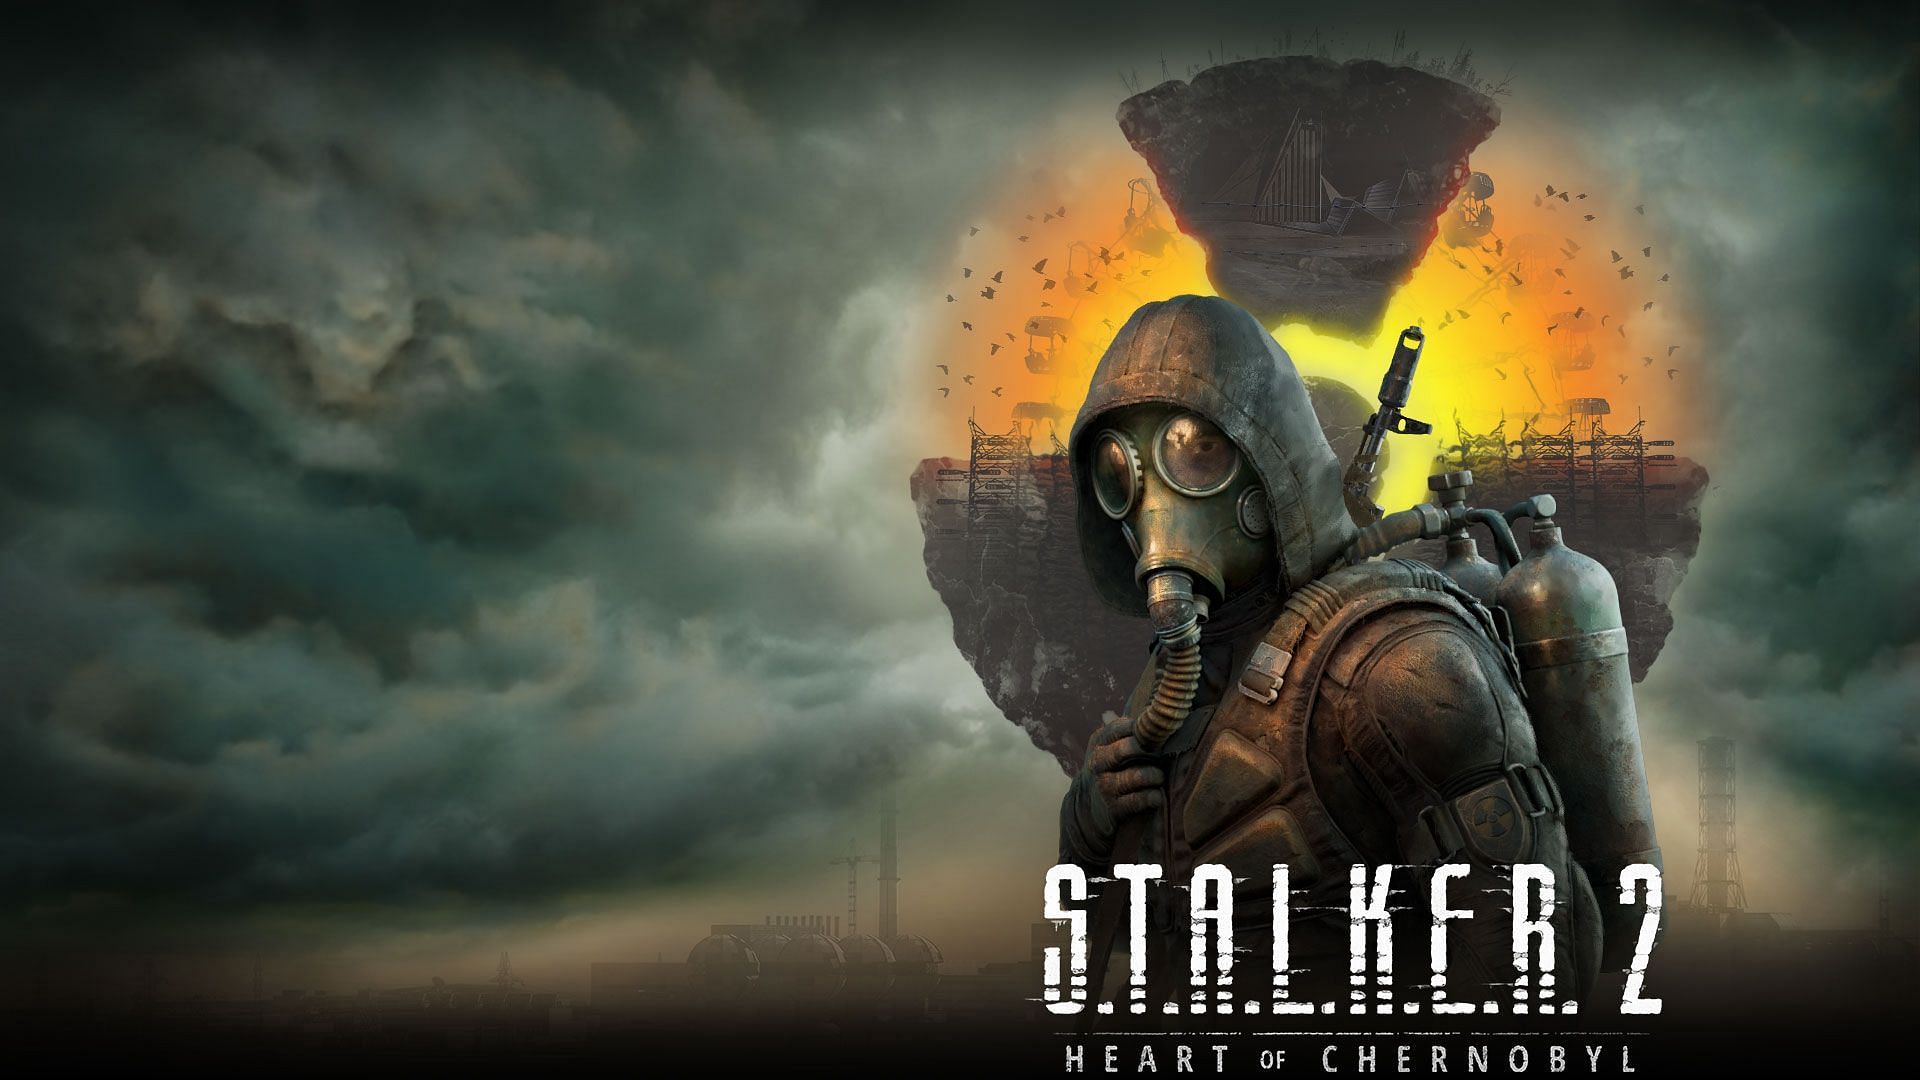 Stalker 2 Heart of Chernobyl gets next release date